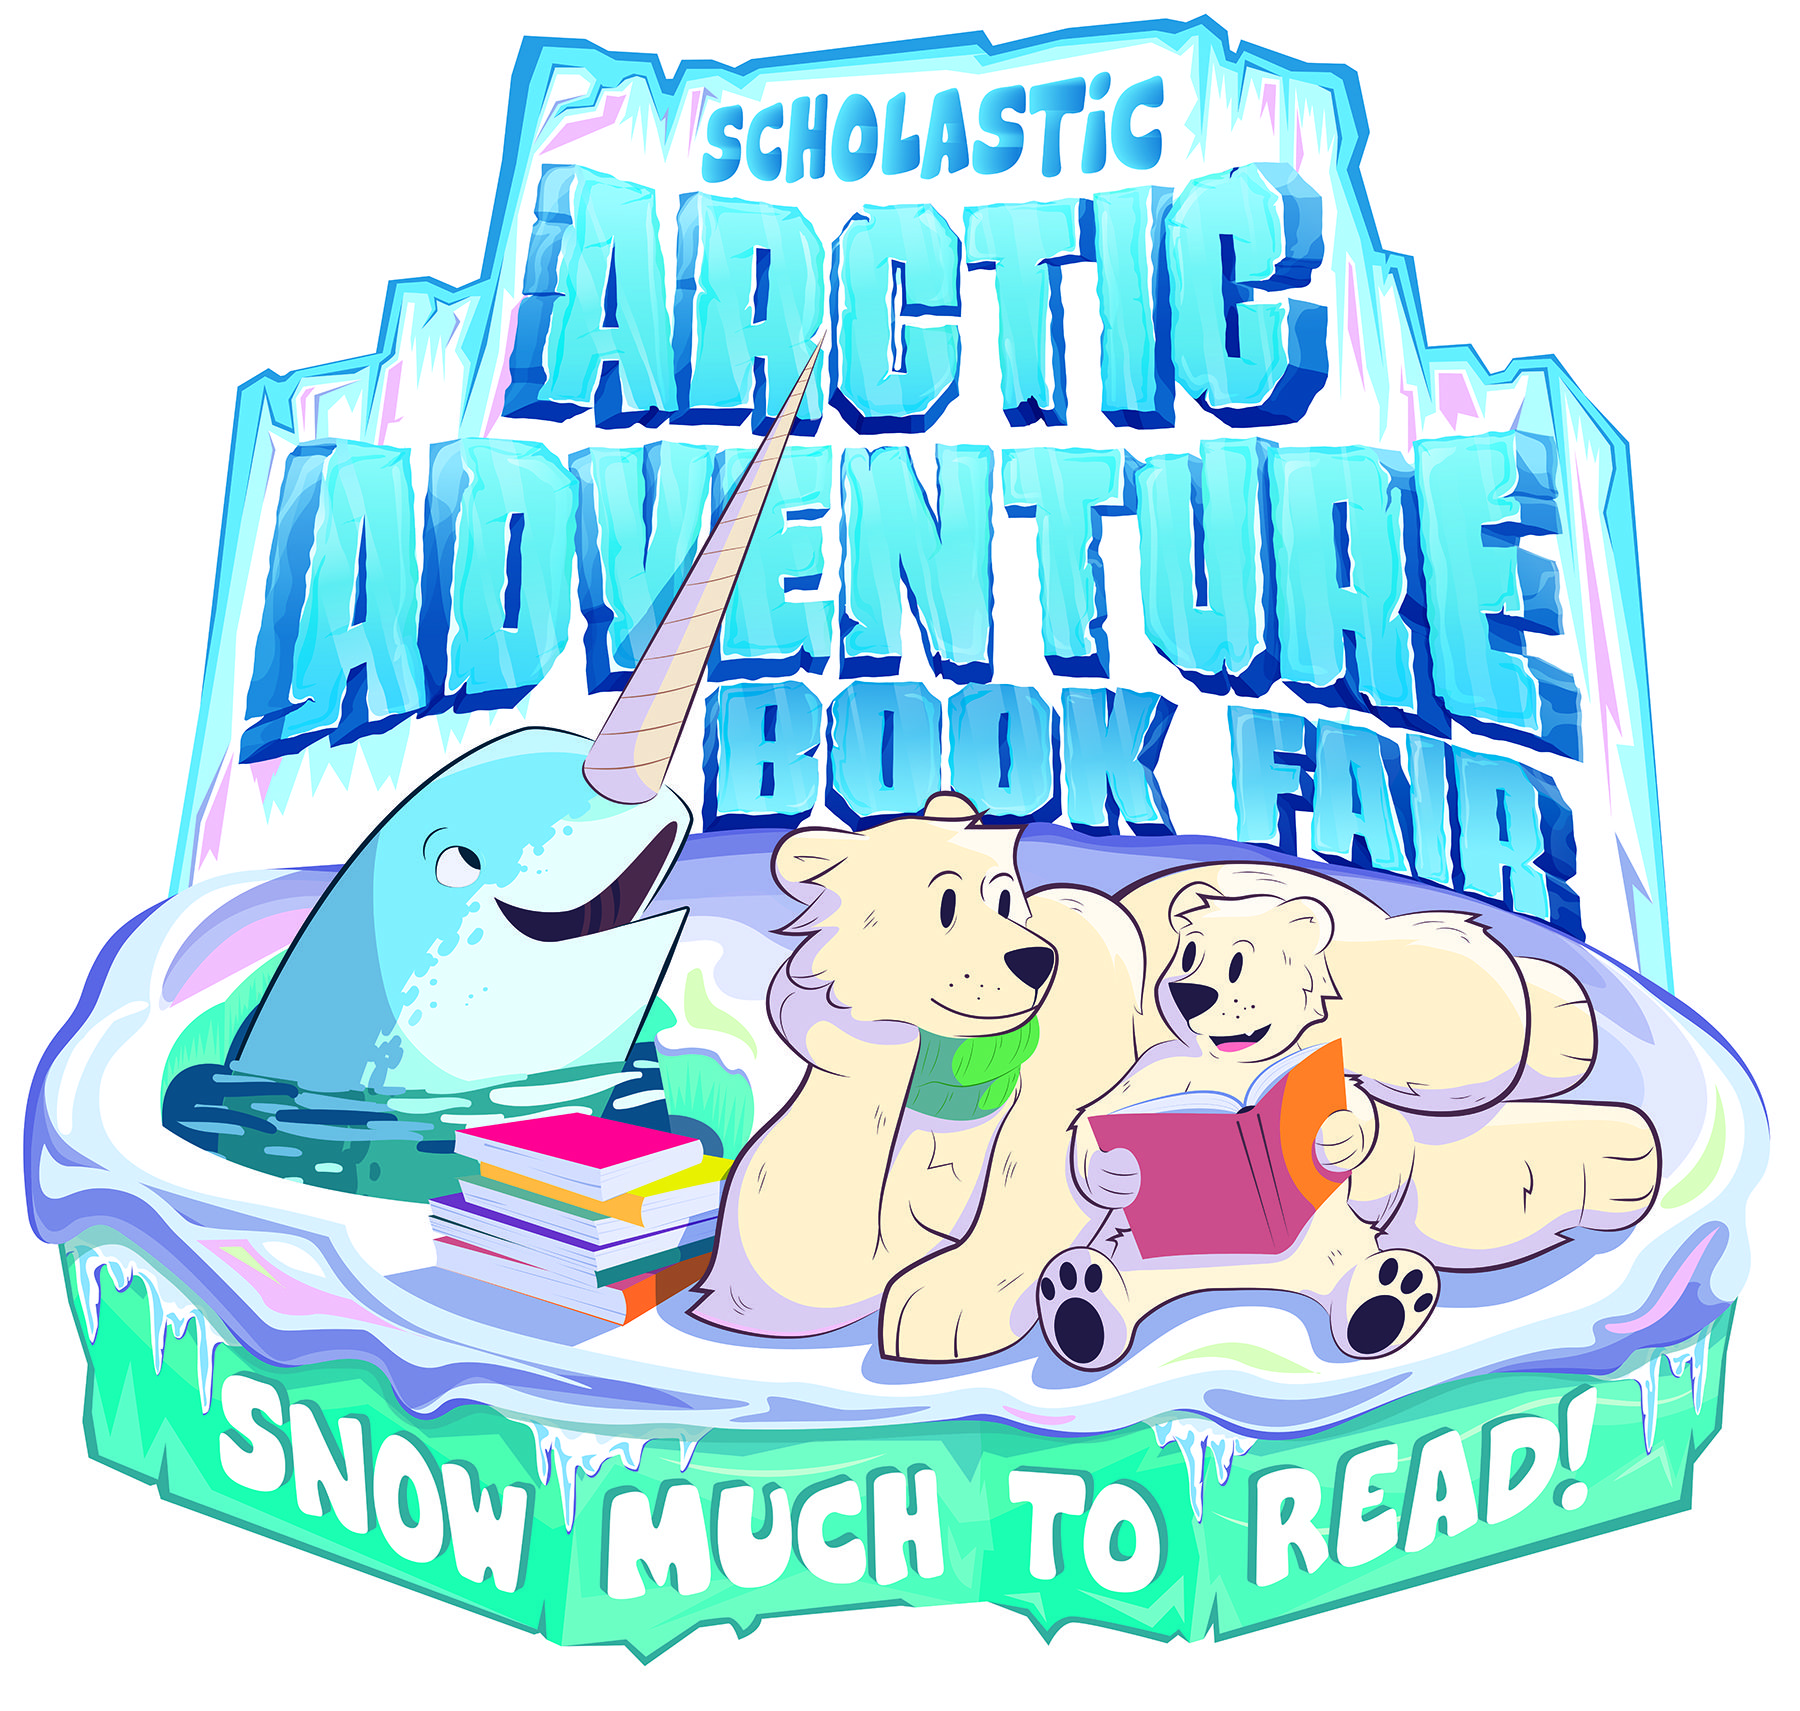 Come to our Scholastic Arctic Adventure Book Fair!